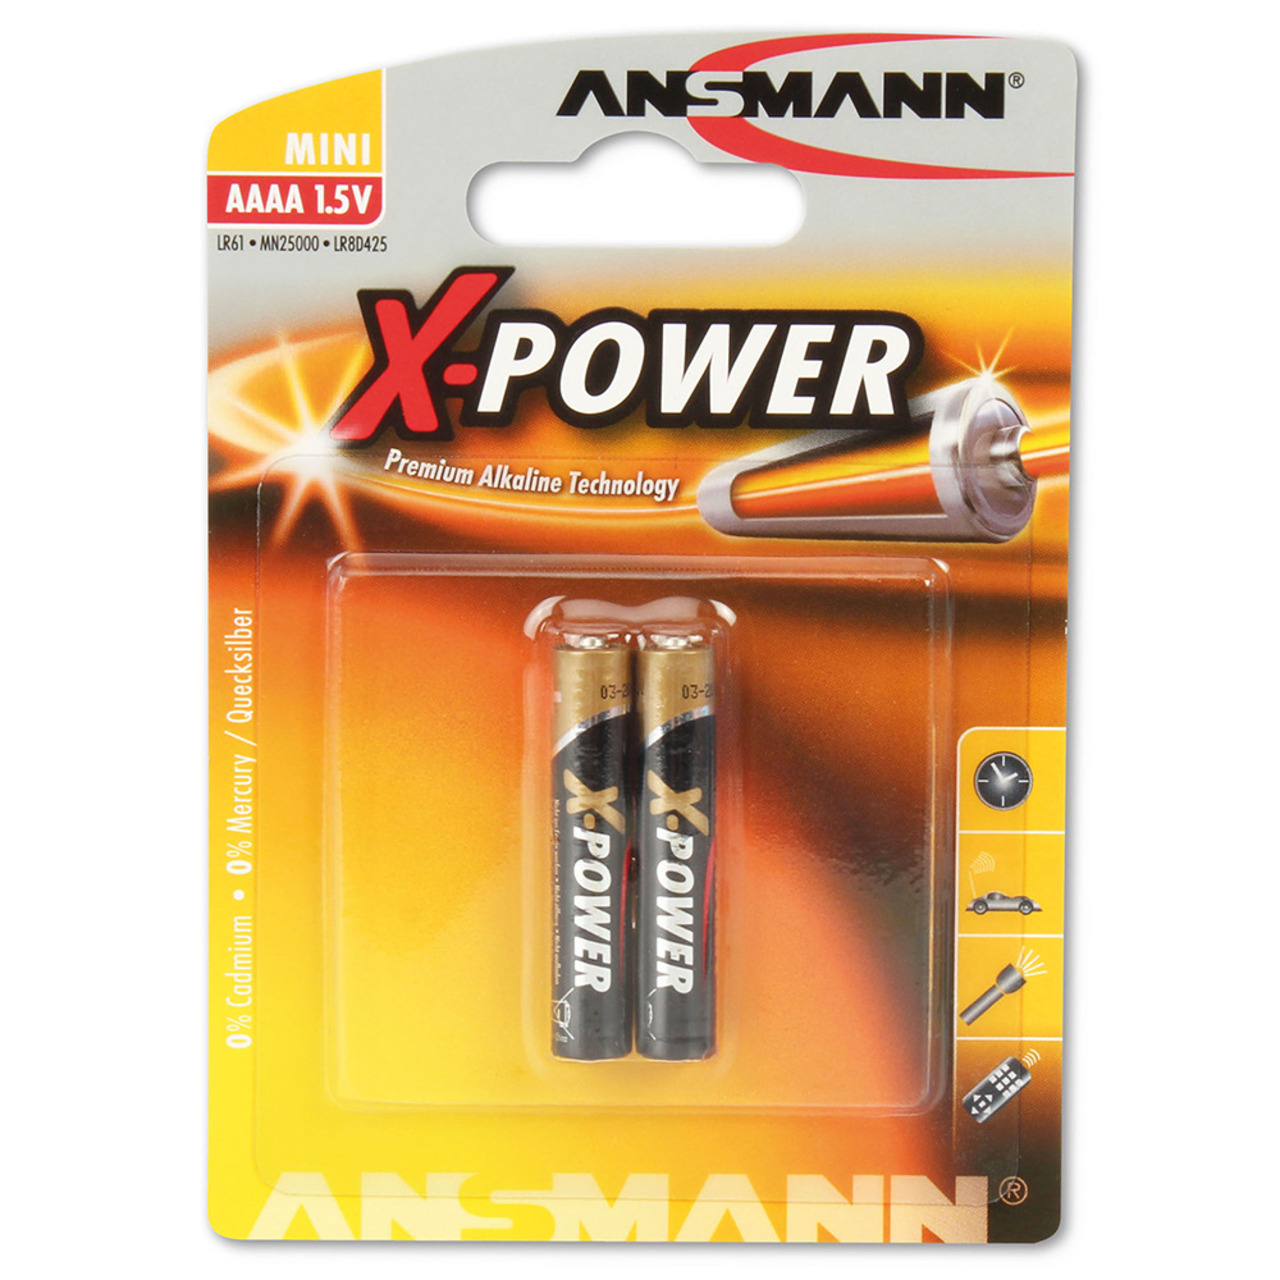 Ansmann Alkaline Batterie Mini Power X AAAA- 2er Pack unter Stromversorgung